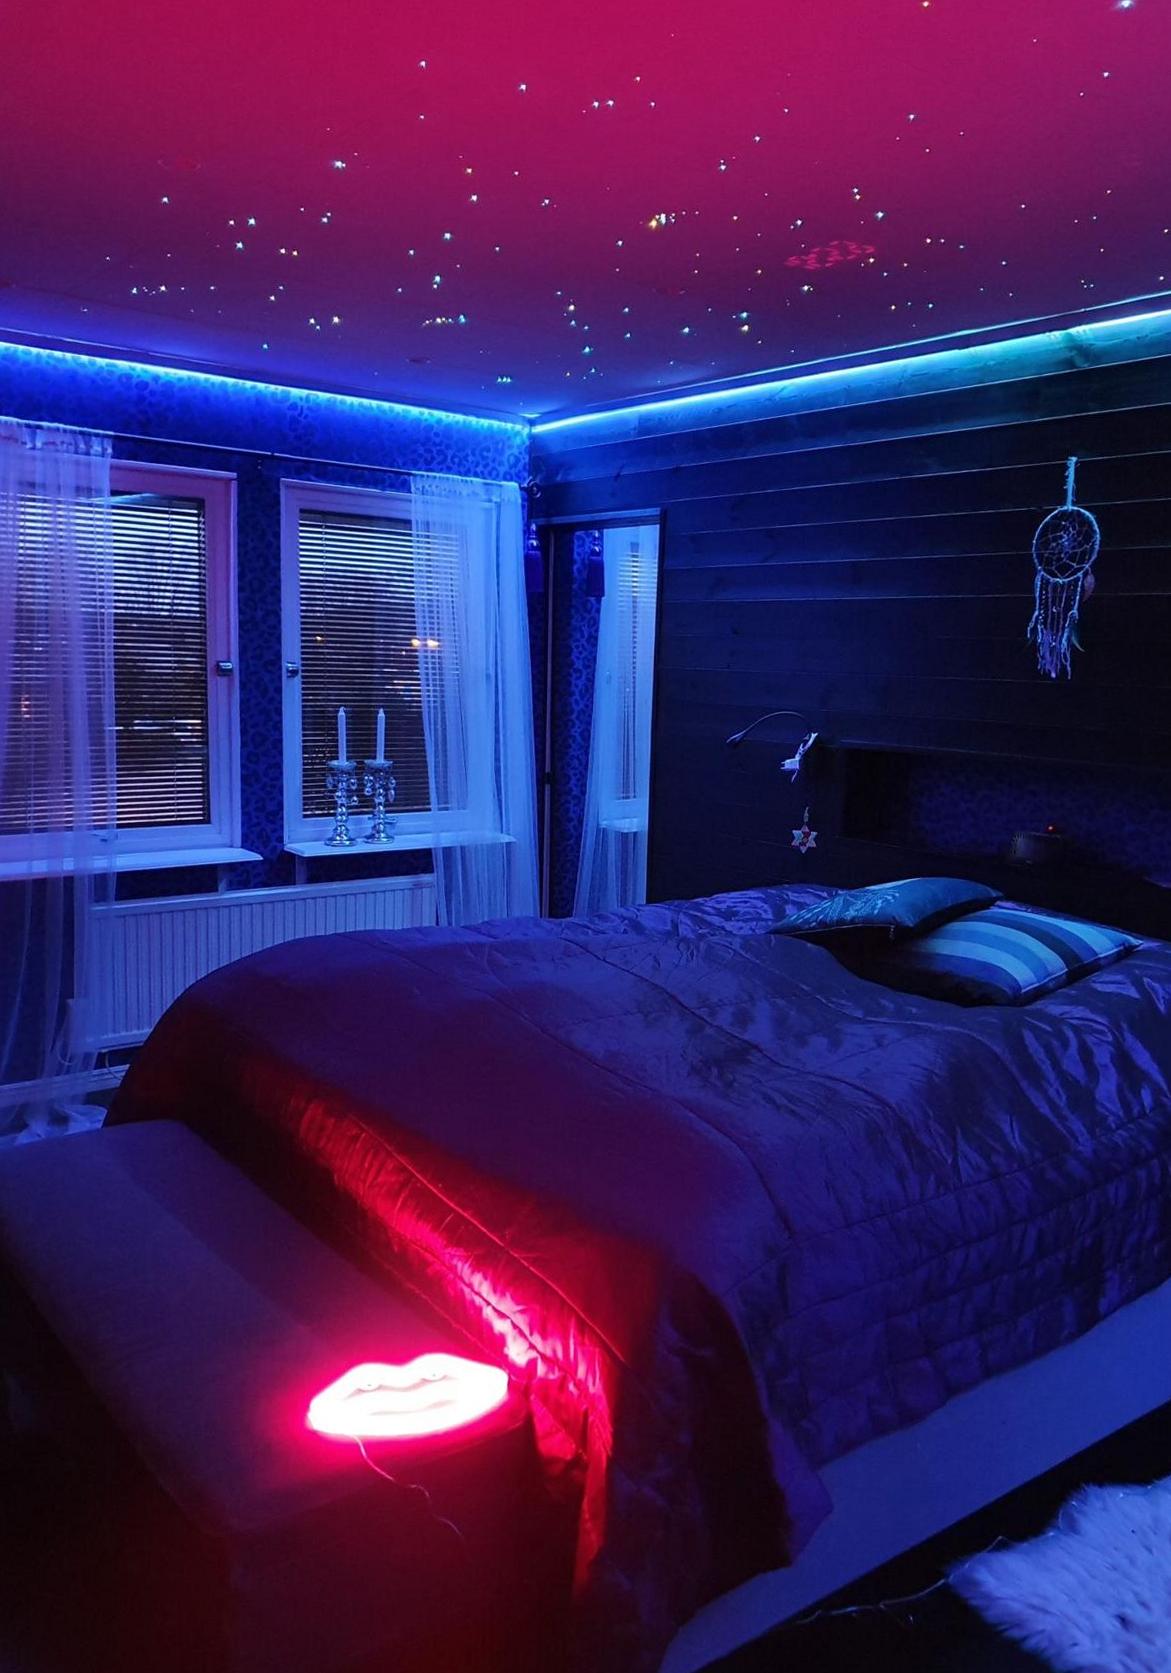 Bedroom Wall Lighting Ideas: Illuminate Your Home With Creativity